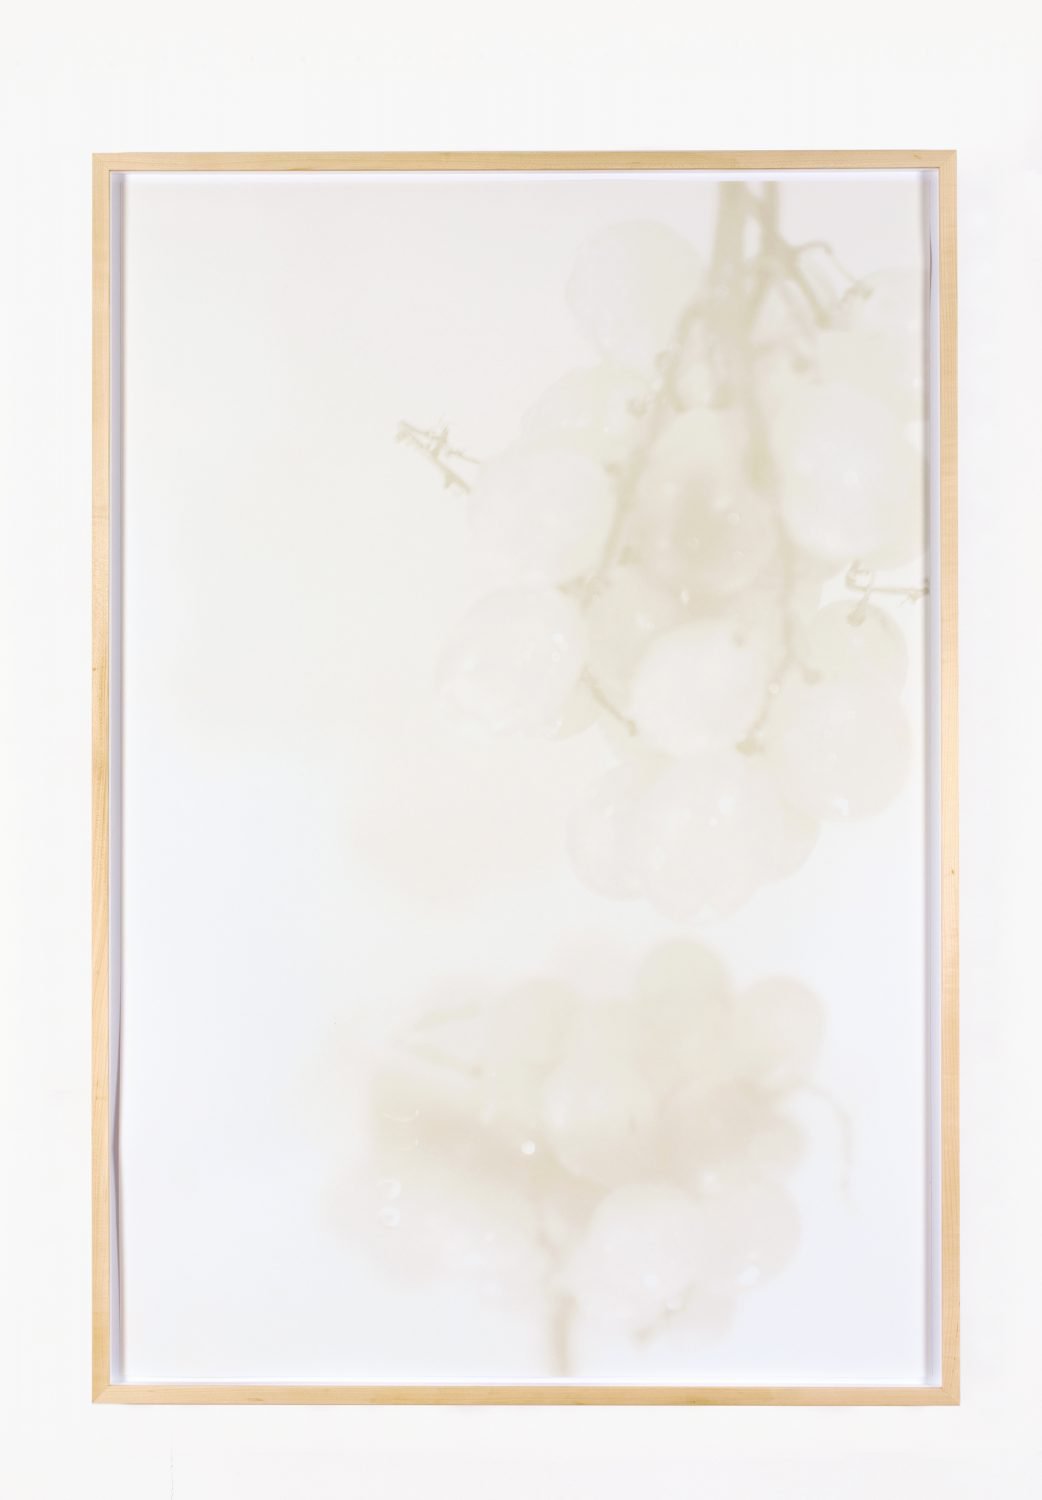 Lisa HolzerTrauben, 2019Pigment print on cotton paper, acrylic metallic paint on wood110.3 x 76 cm